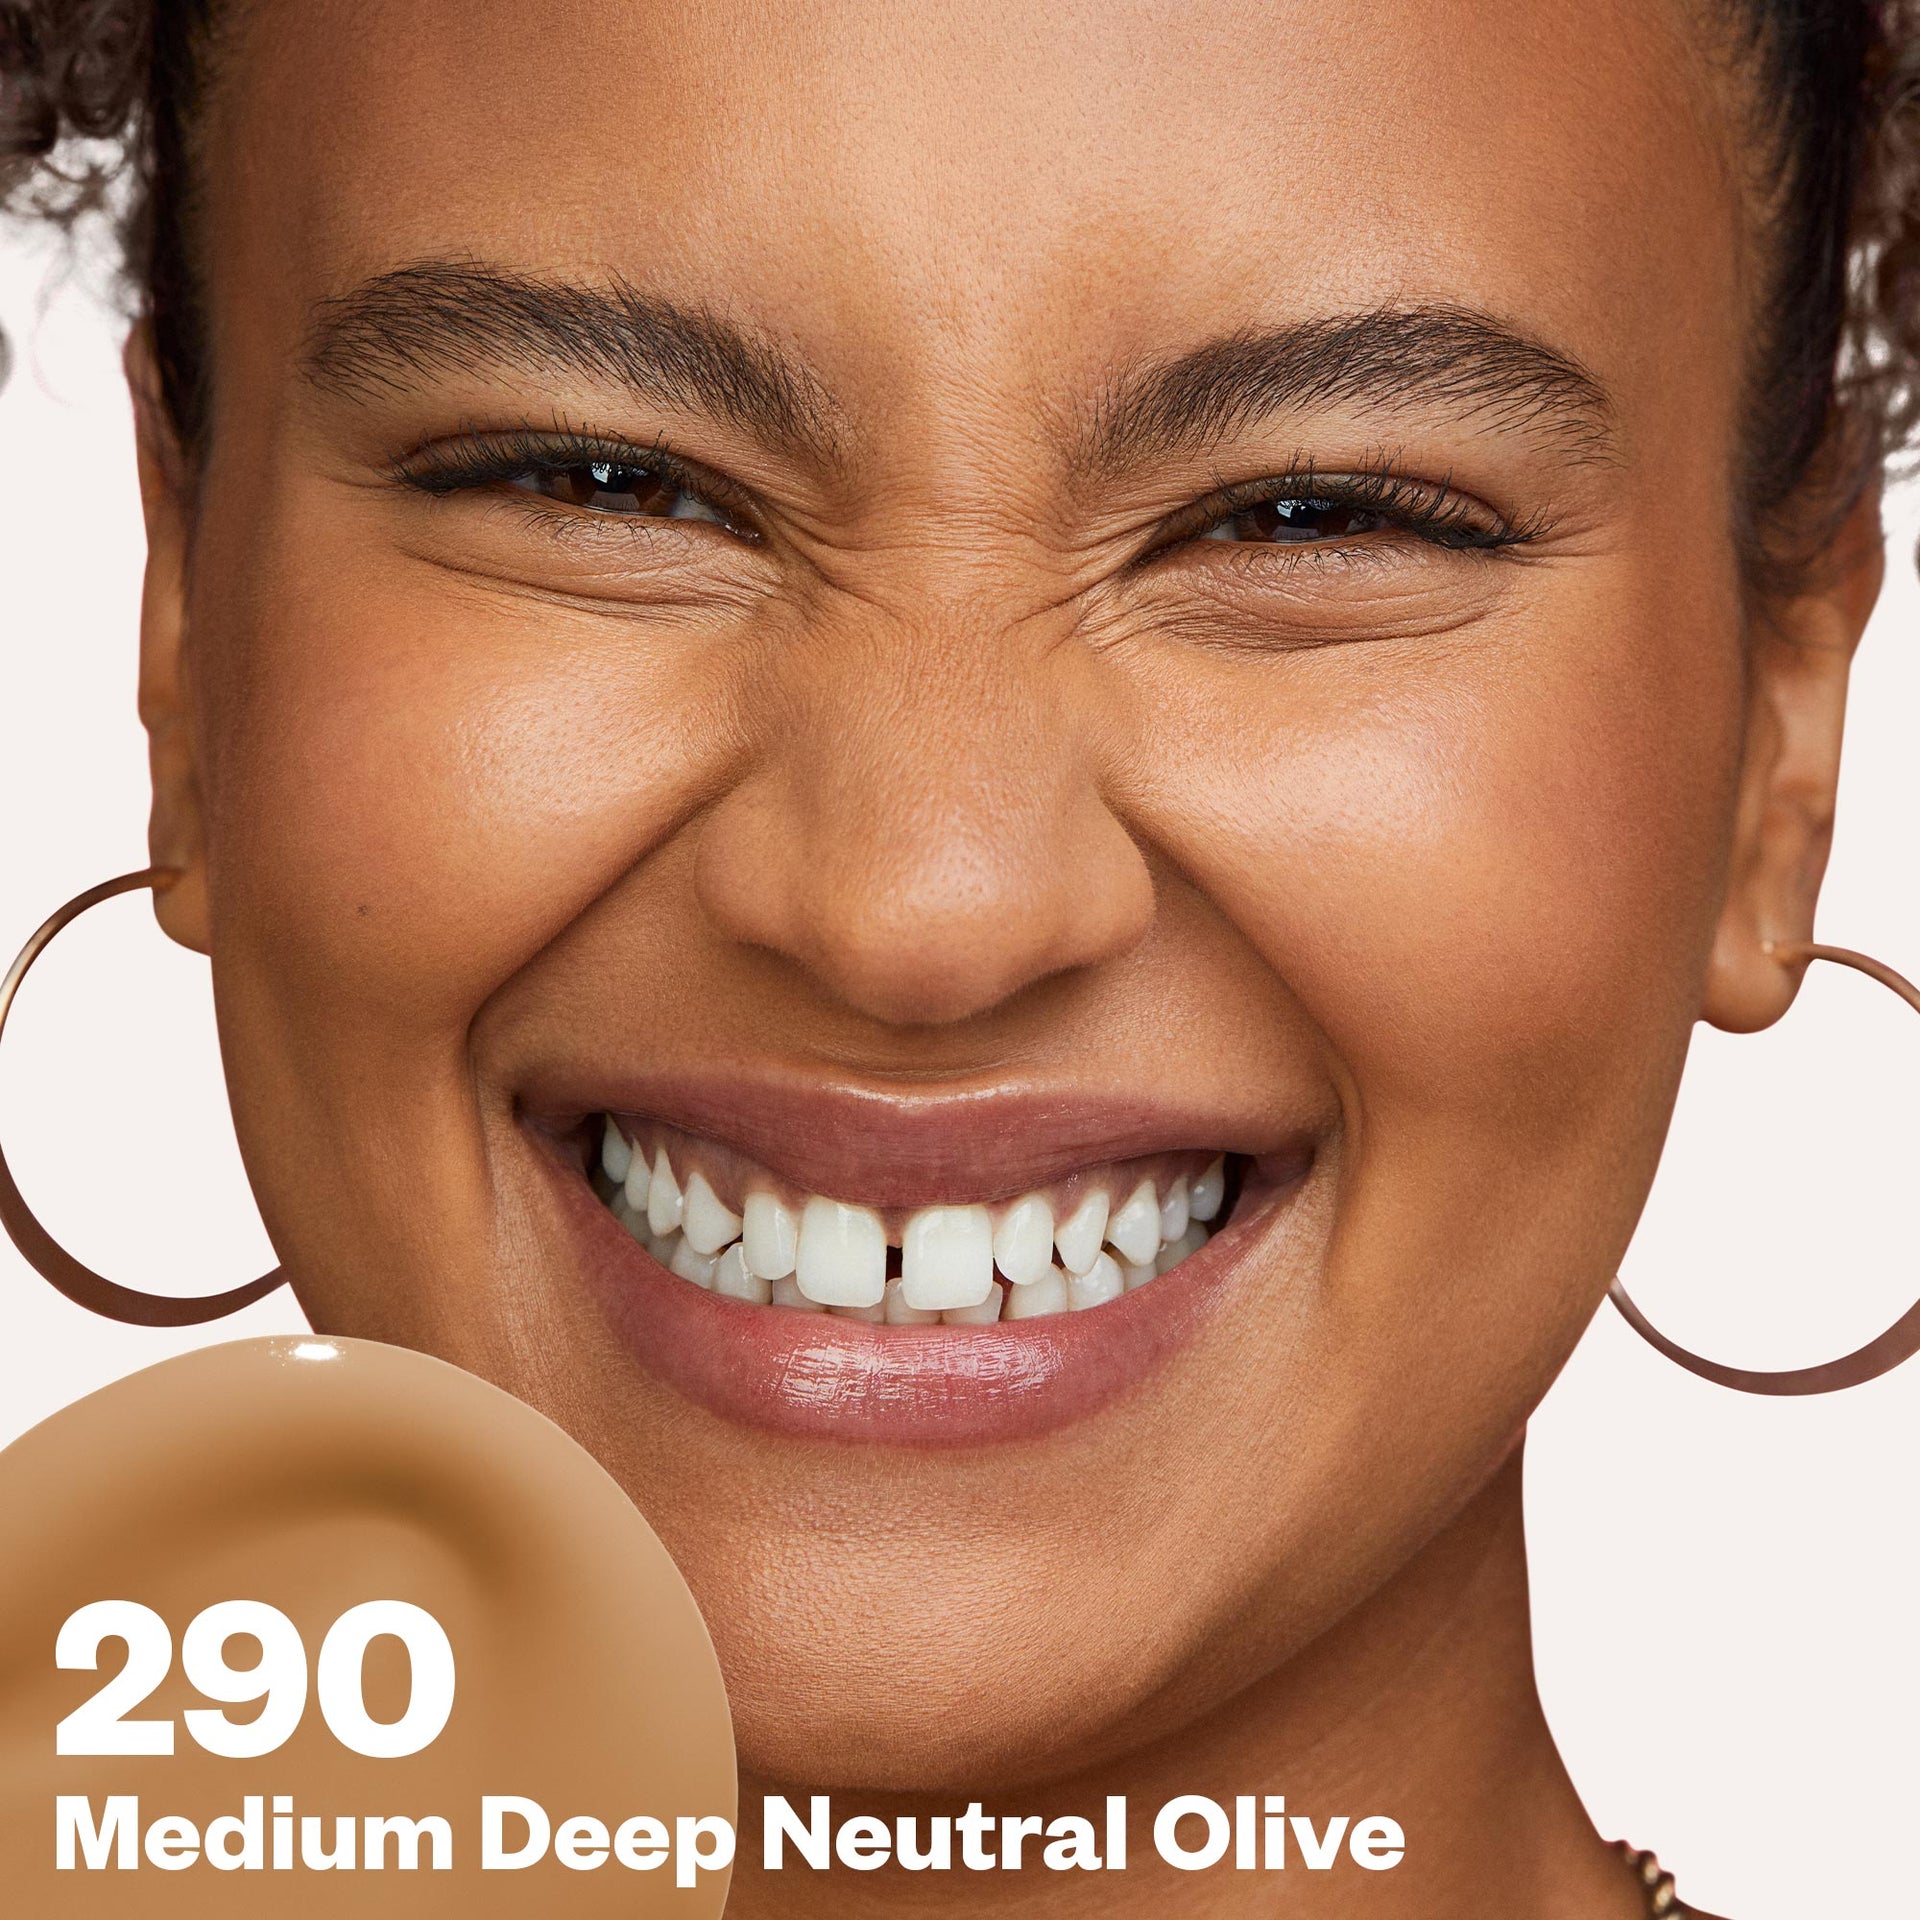 Medium Deep Neutral Olive 290 Improving Foundation SPF 25